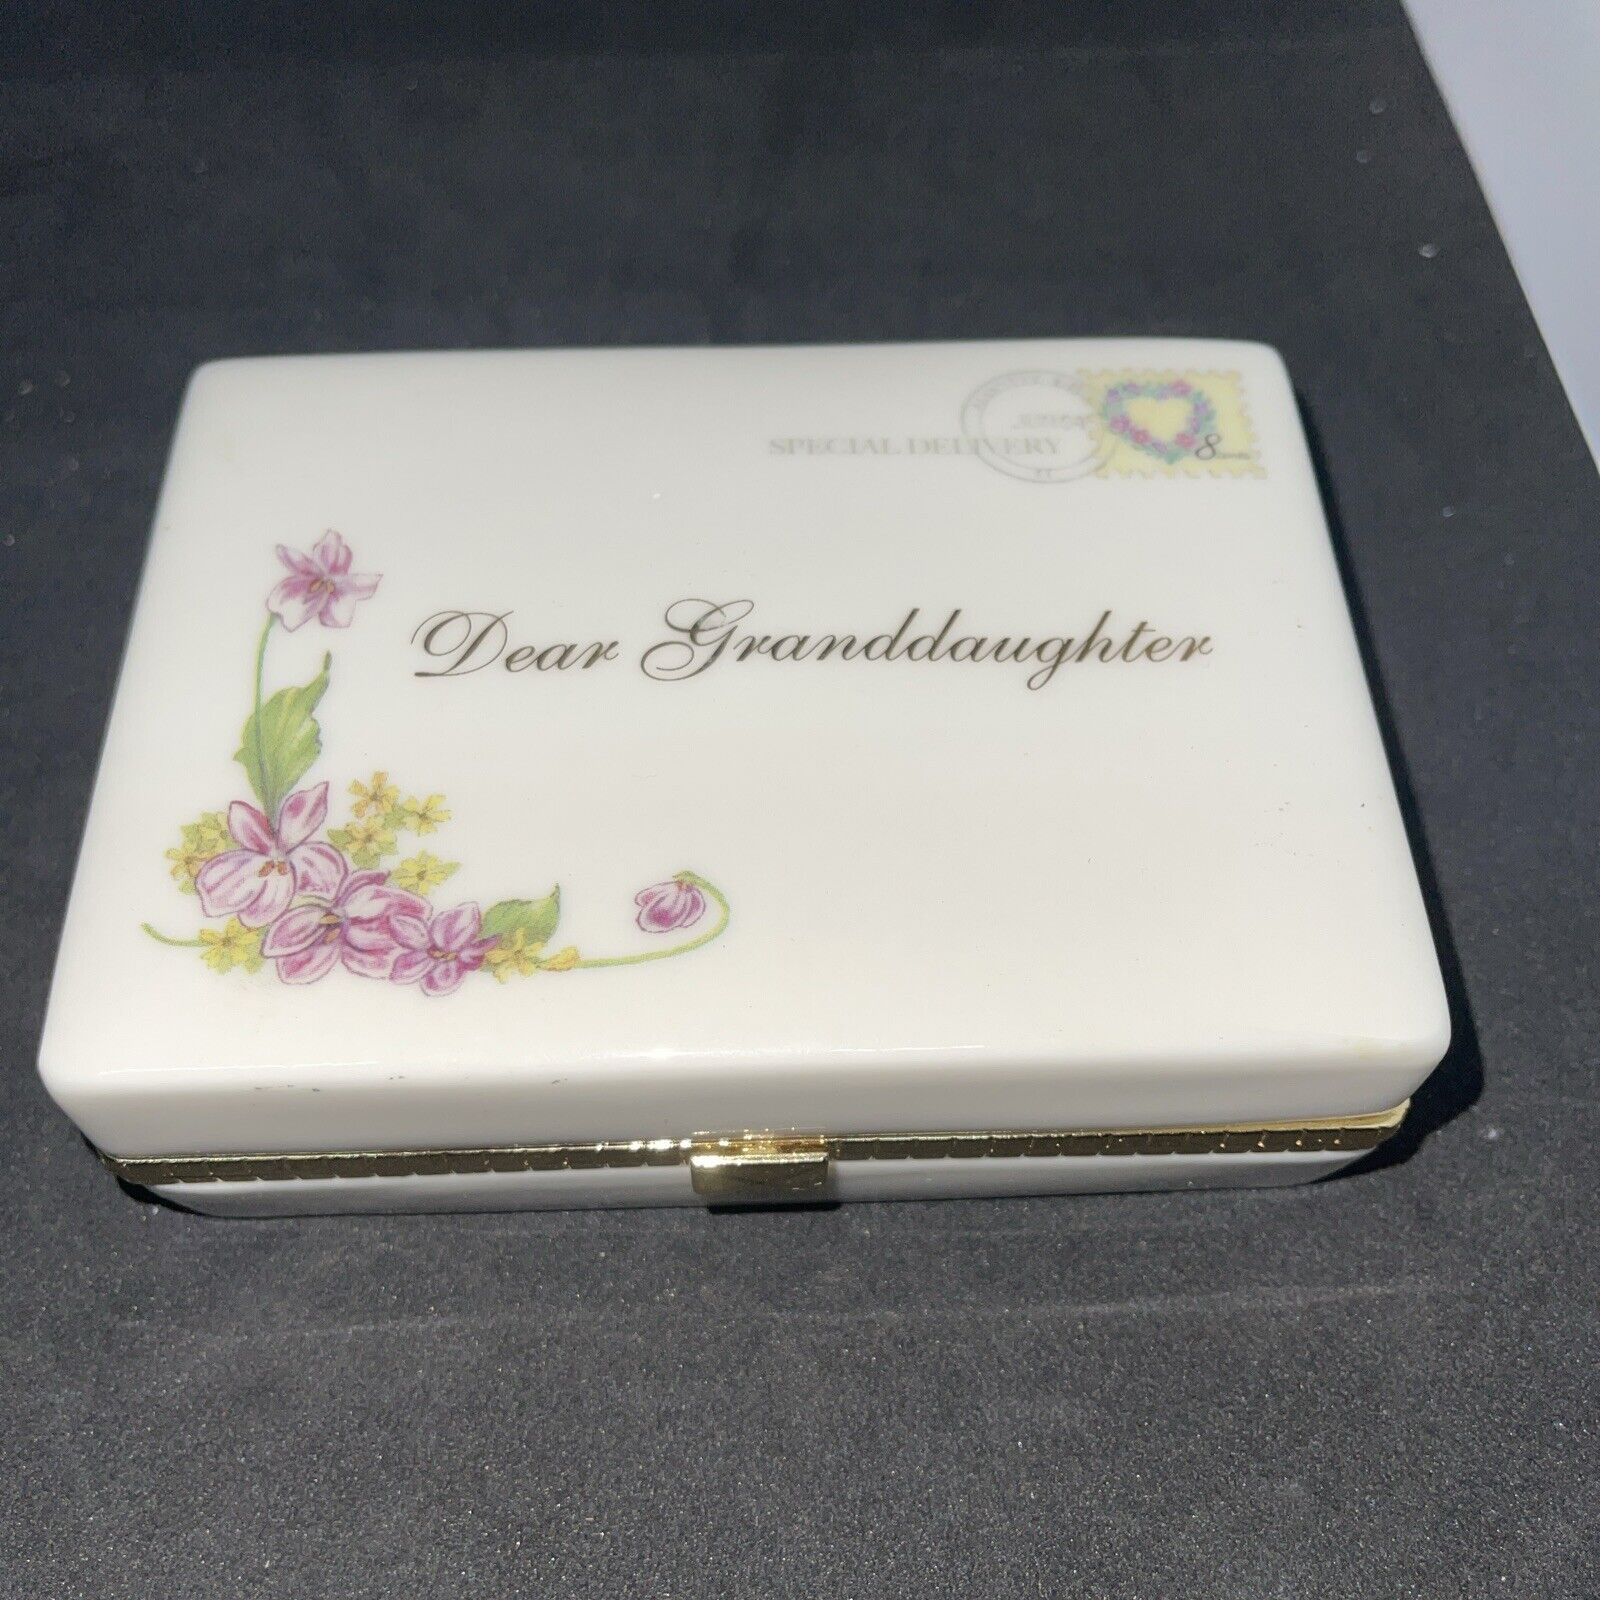 Ardleigh Elliott Dear Granddaughter Porcelain Music Box 2005 Ltd Edition Gift